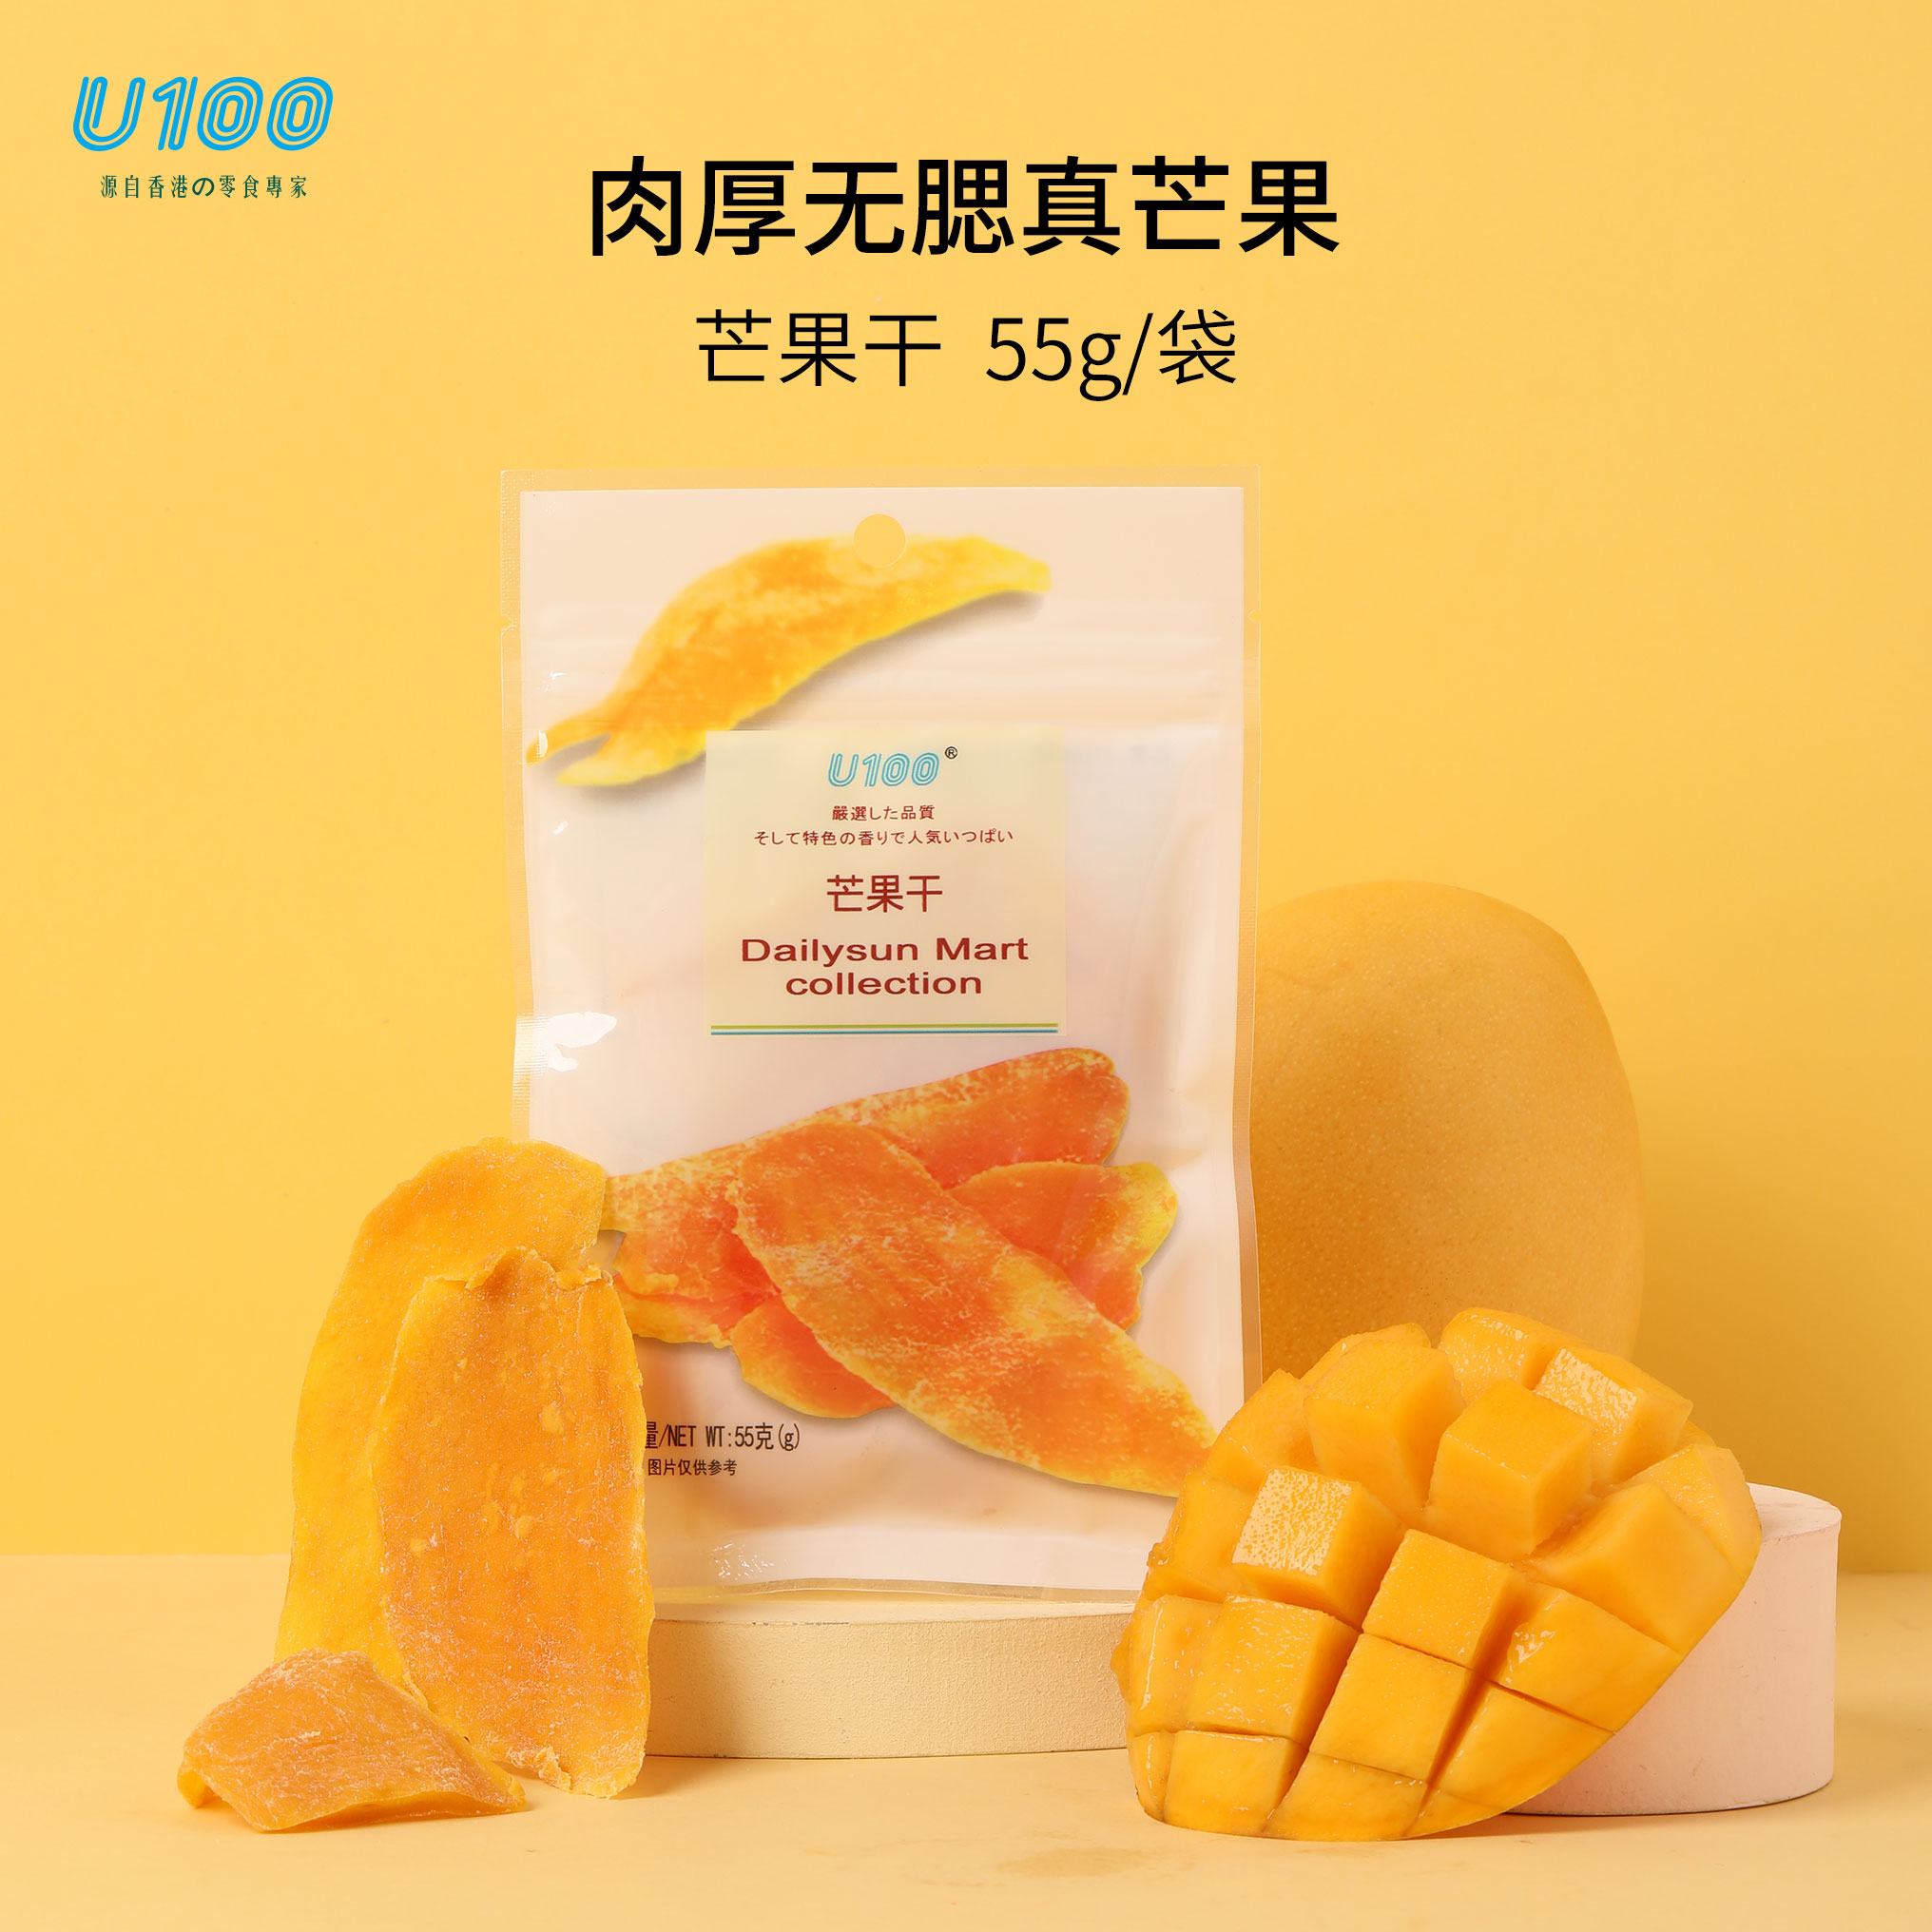 U100 mango dry bag net red snack gift bag original candied fruit leisure office childrens food